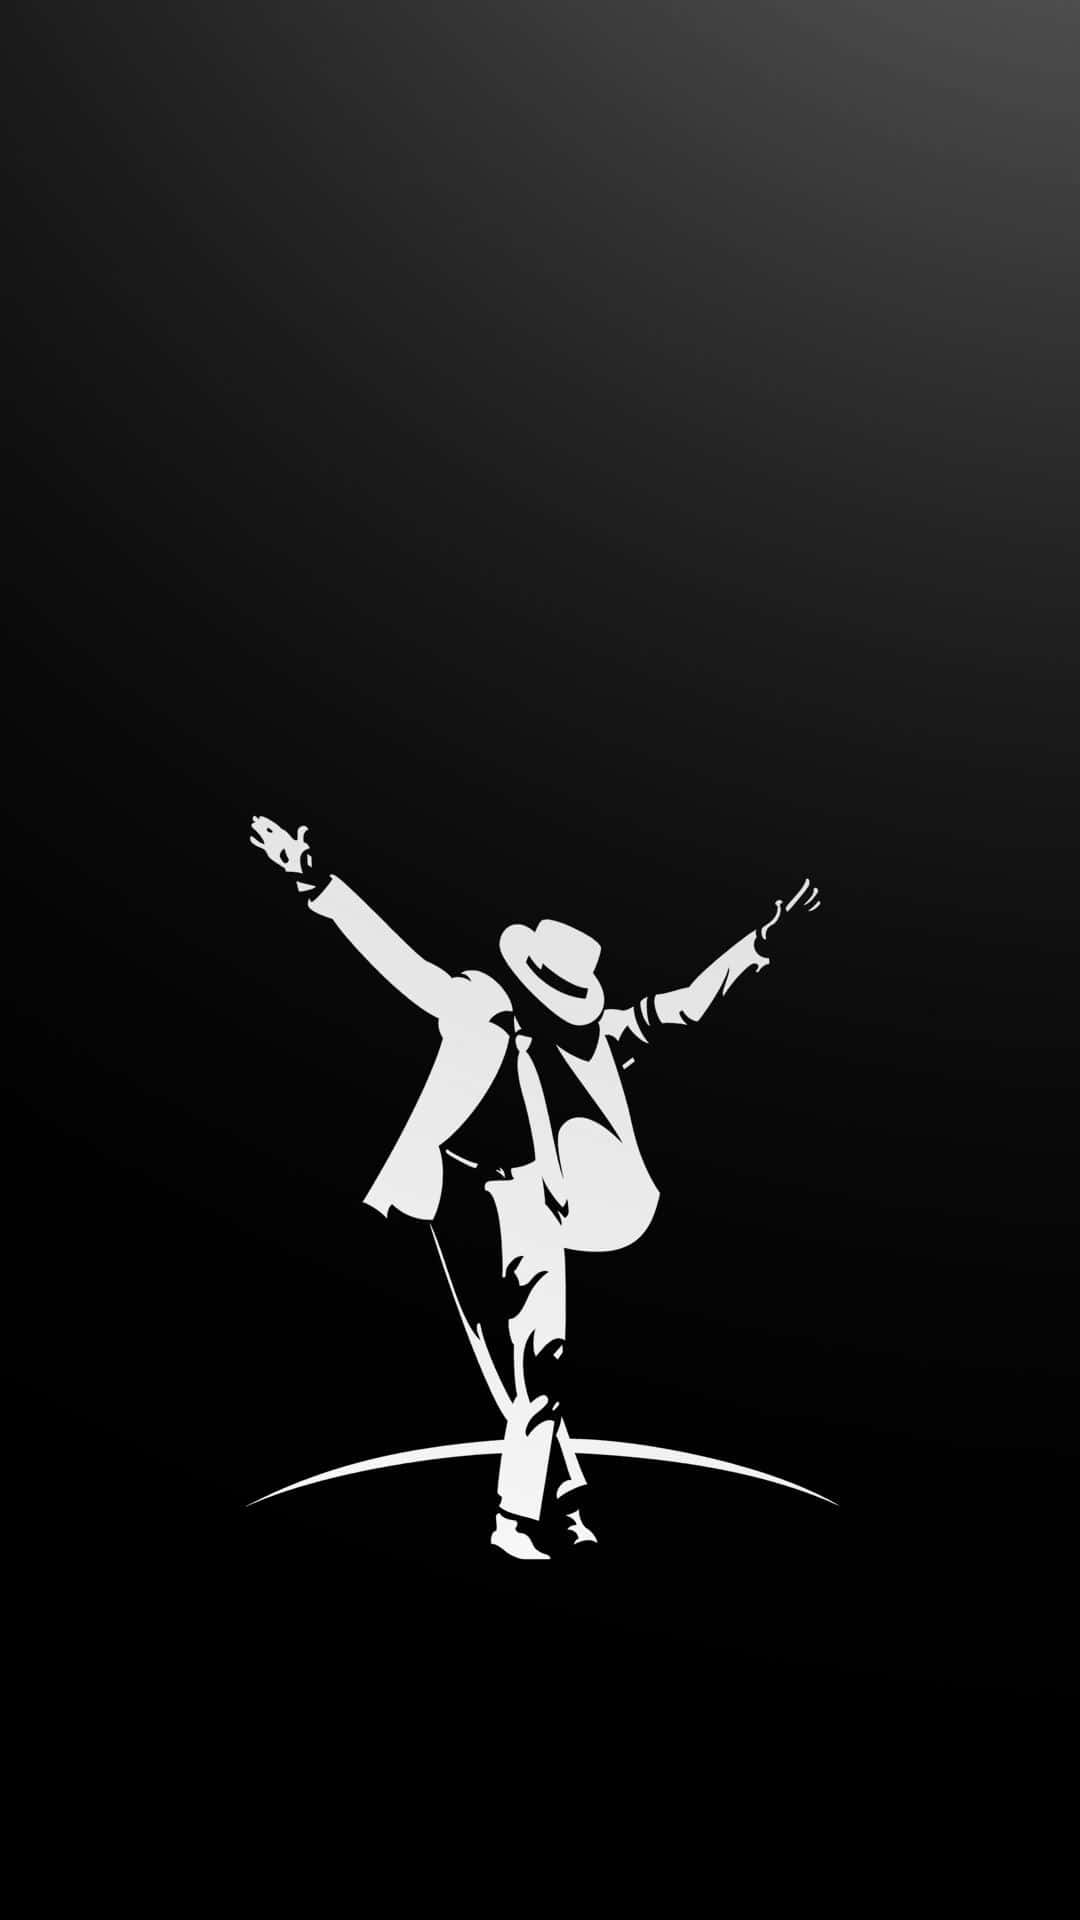 Michael Jackson -Slave To The Rhythm- by Maikomittsu on DeviantArt